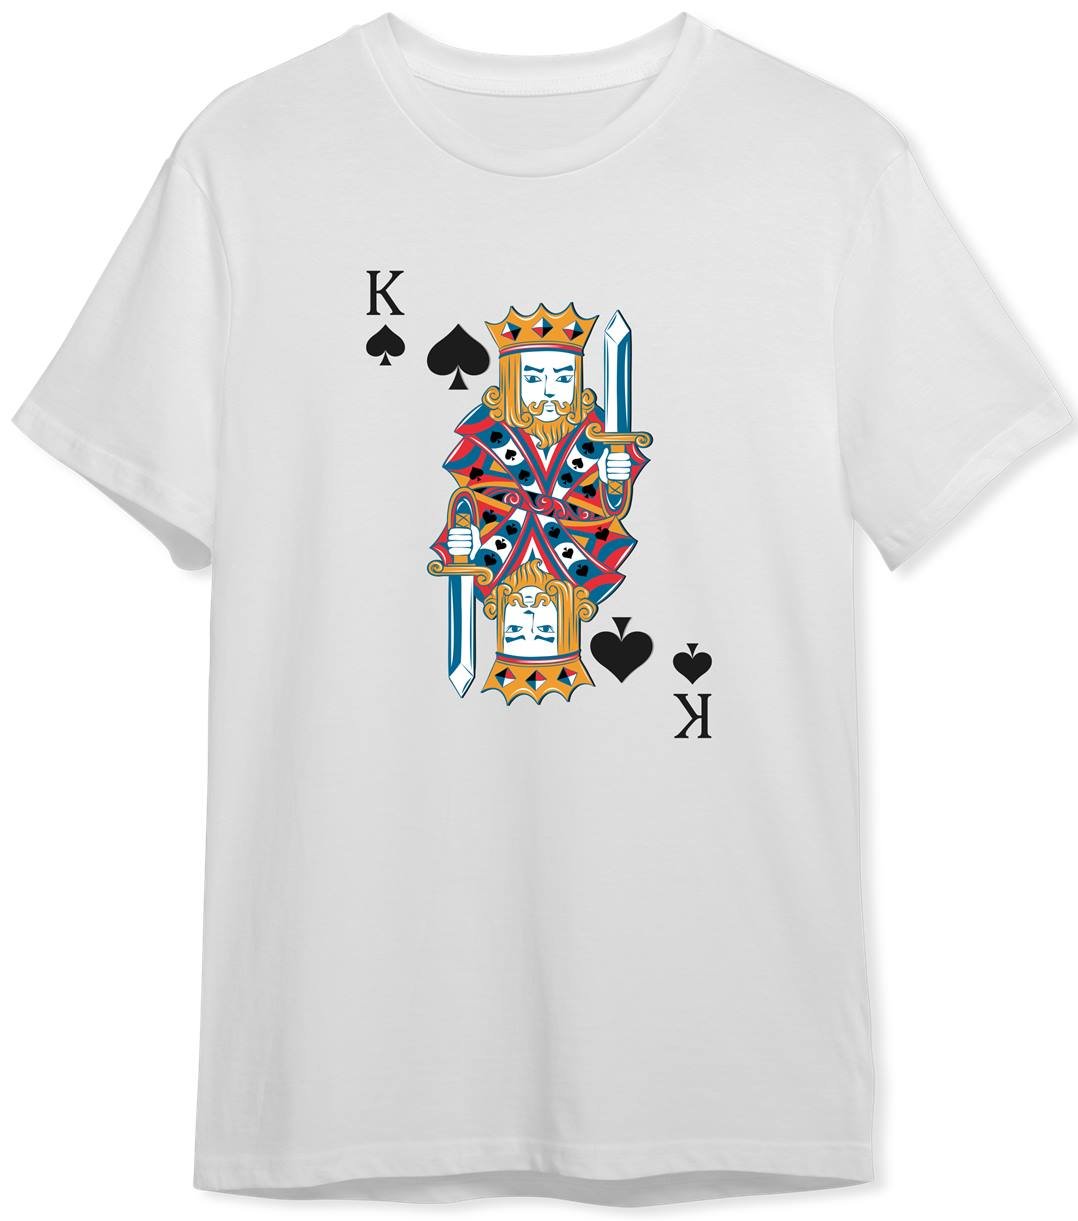 Bild: T-Shirt Herren - Spielkarte Pik König Geschenkidee